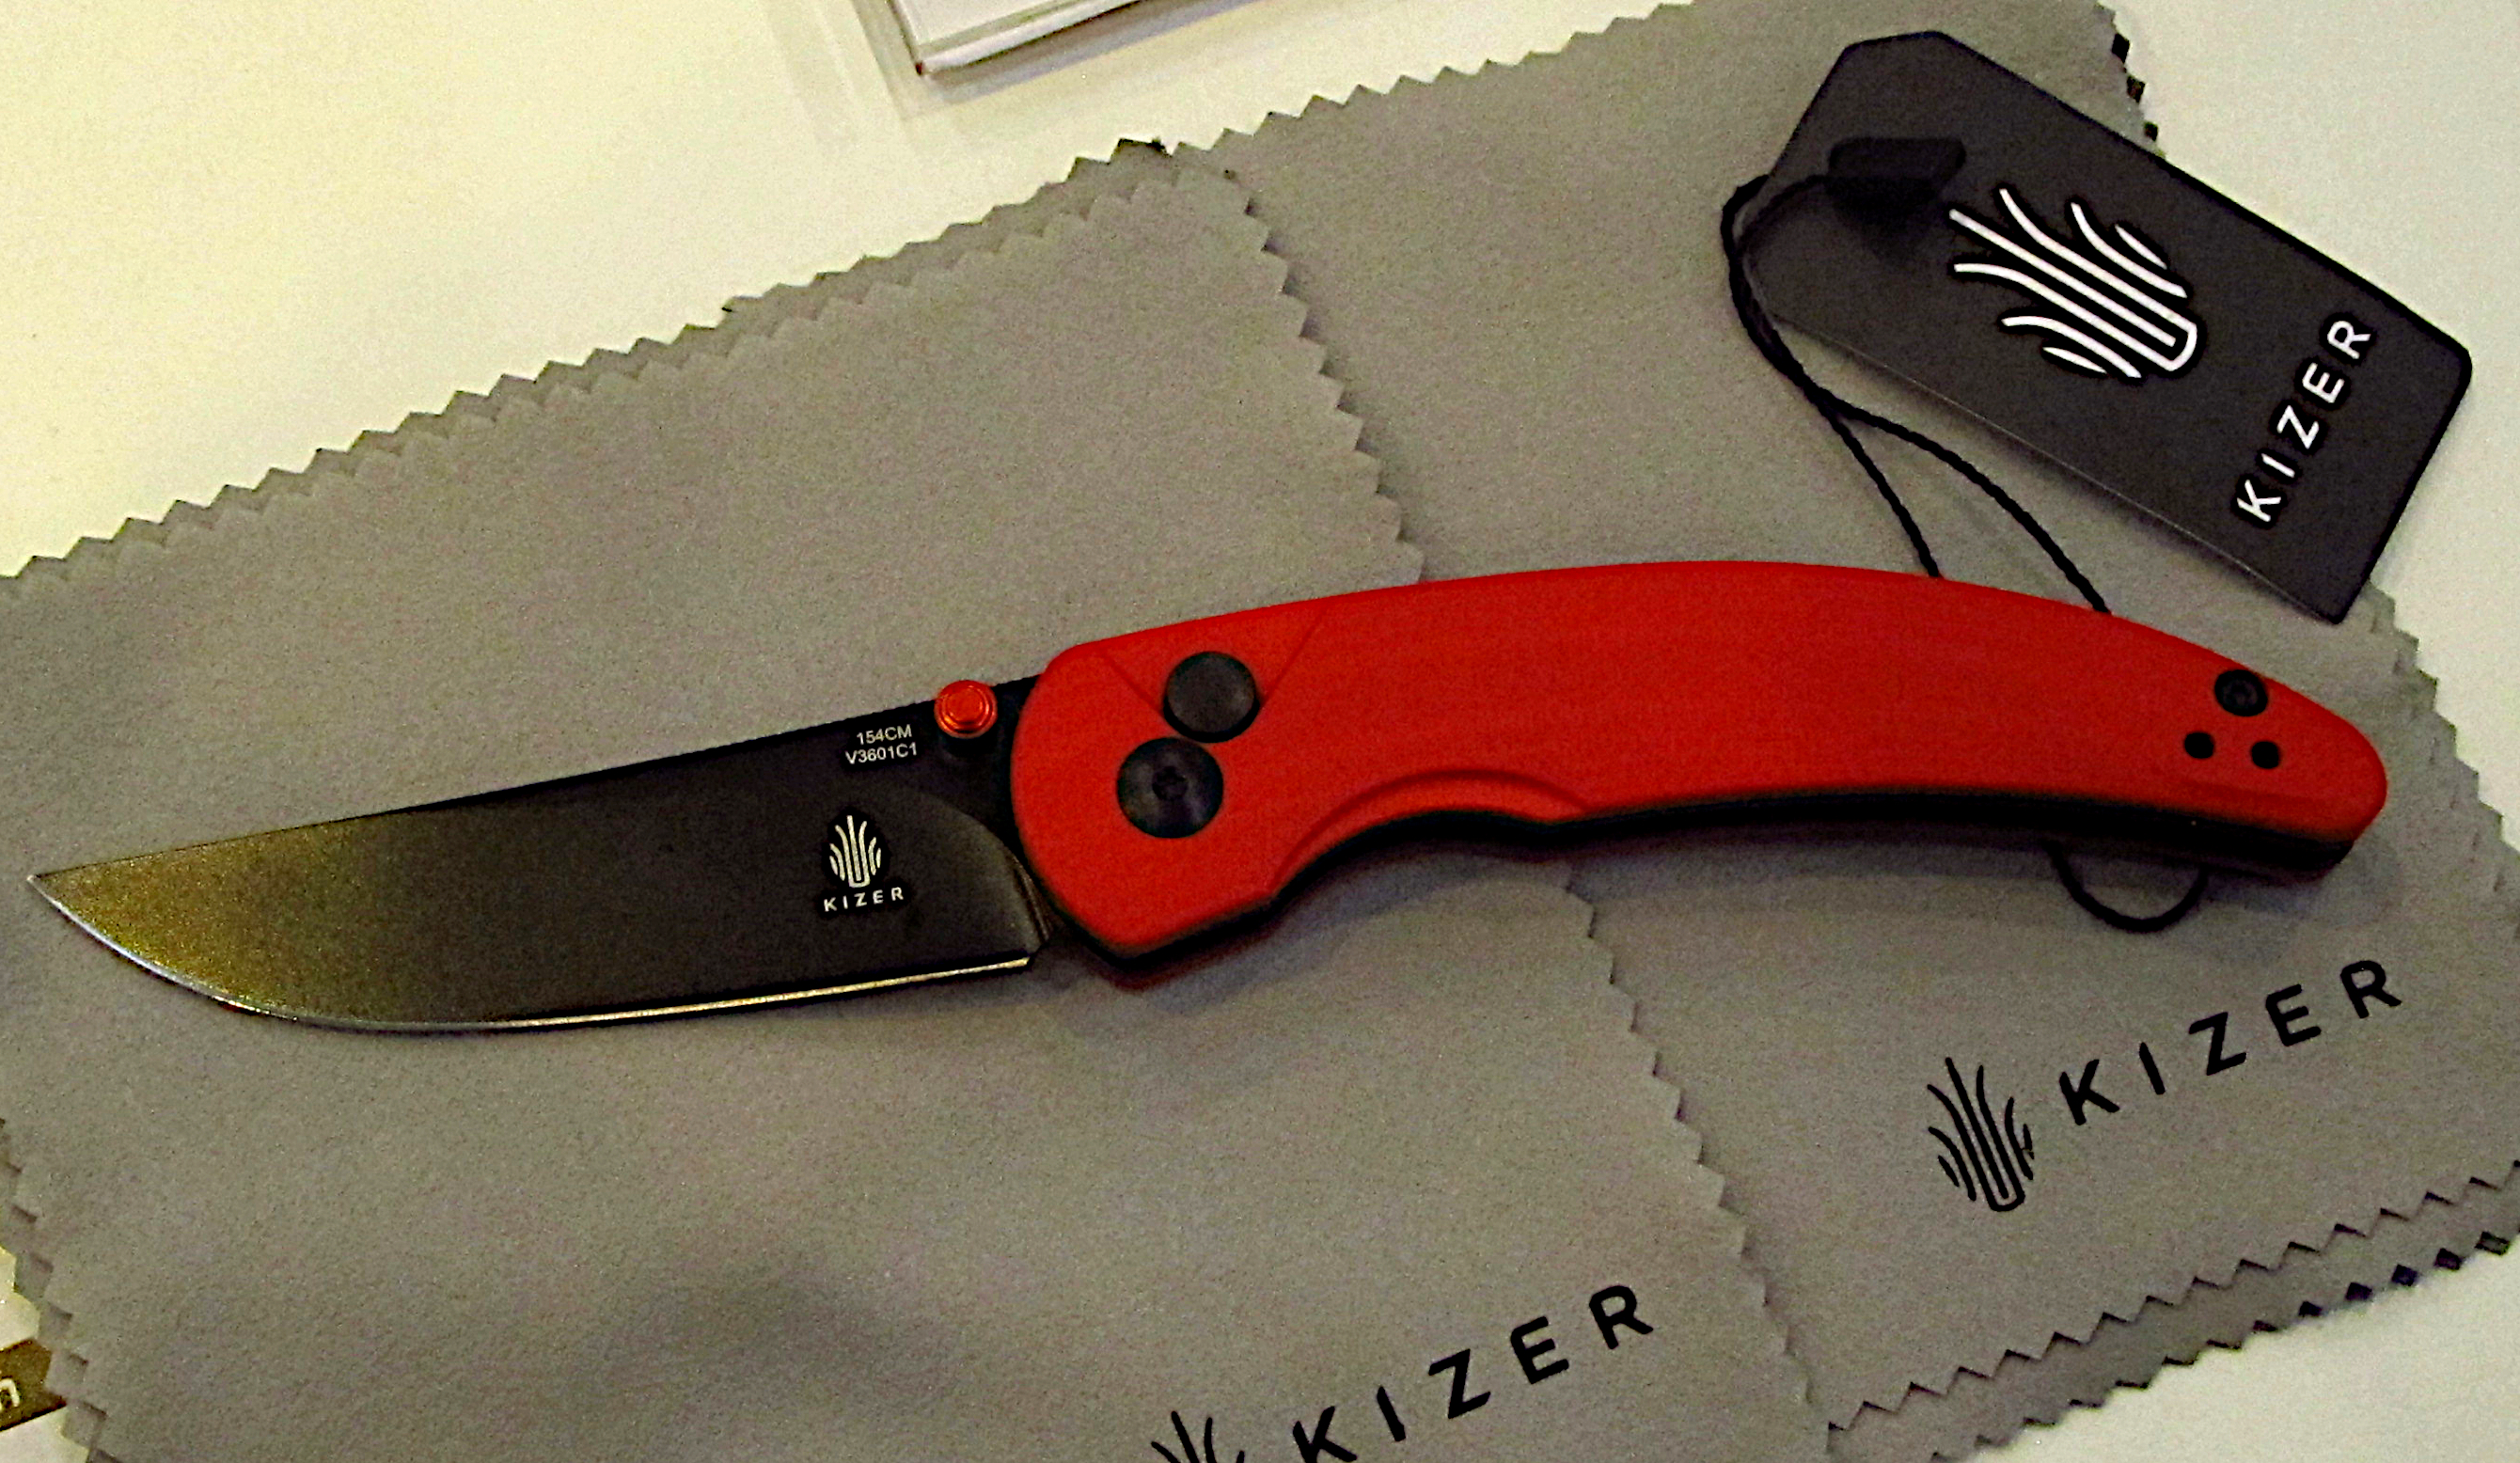  Kizer Chili Pepper EDC Knife, 3 Inches 154CM Blade